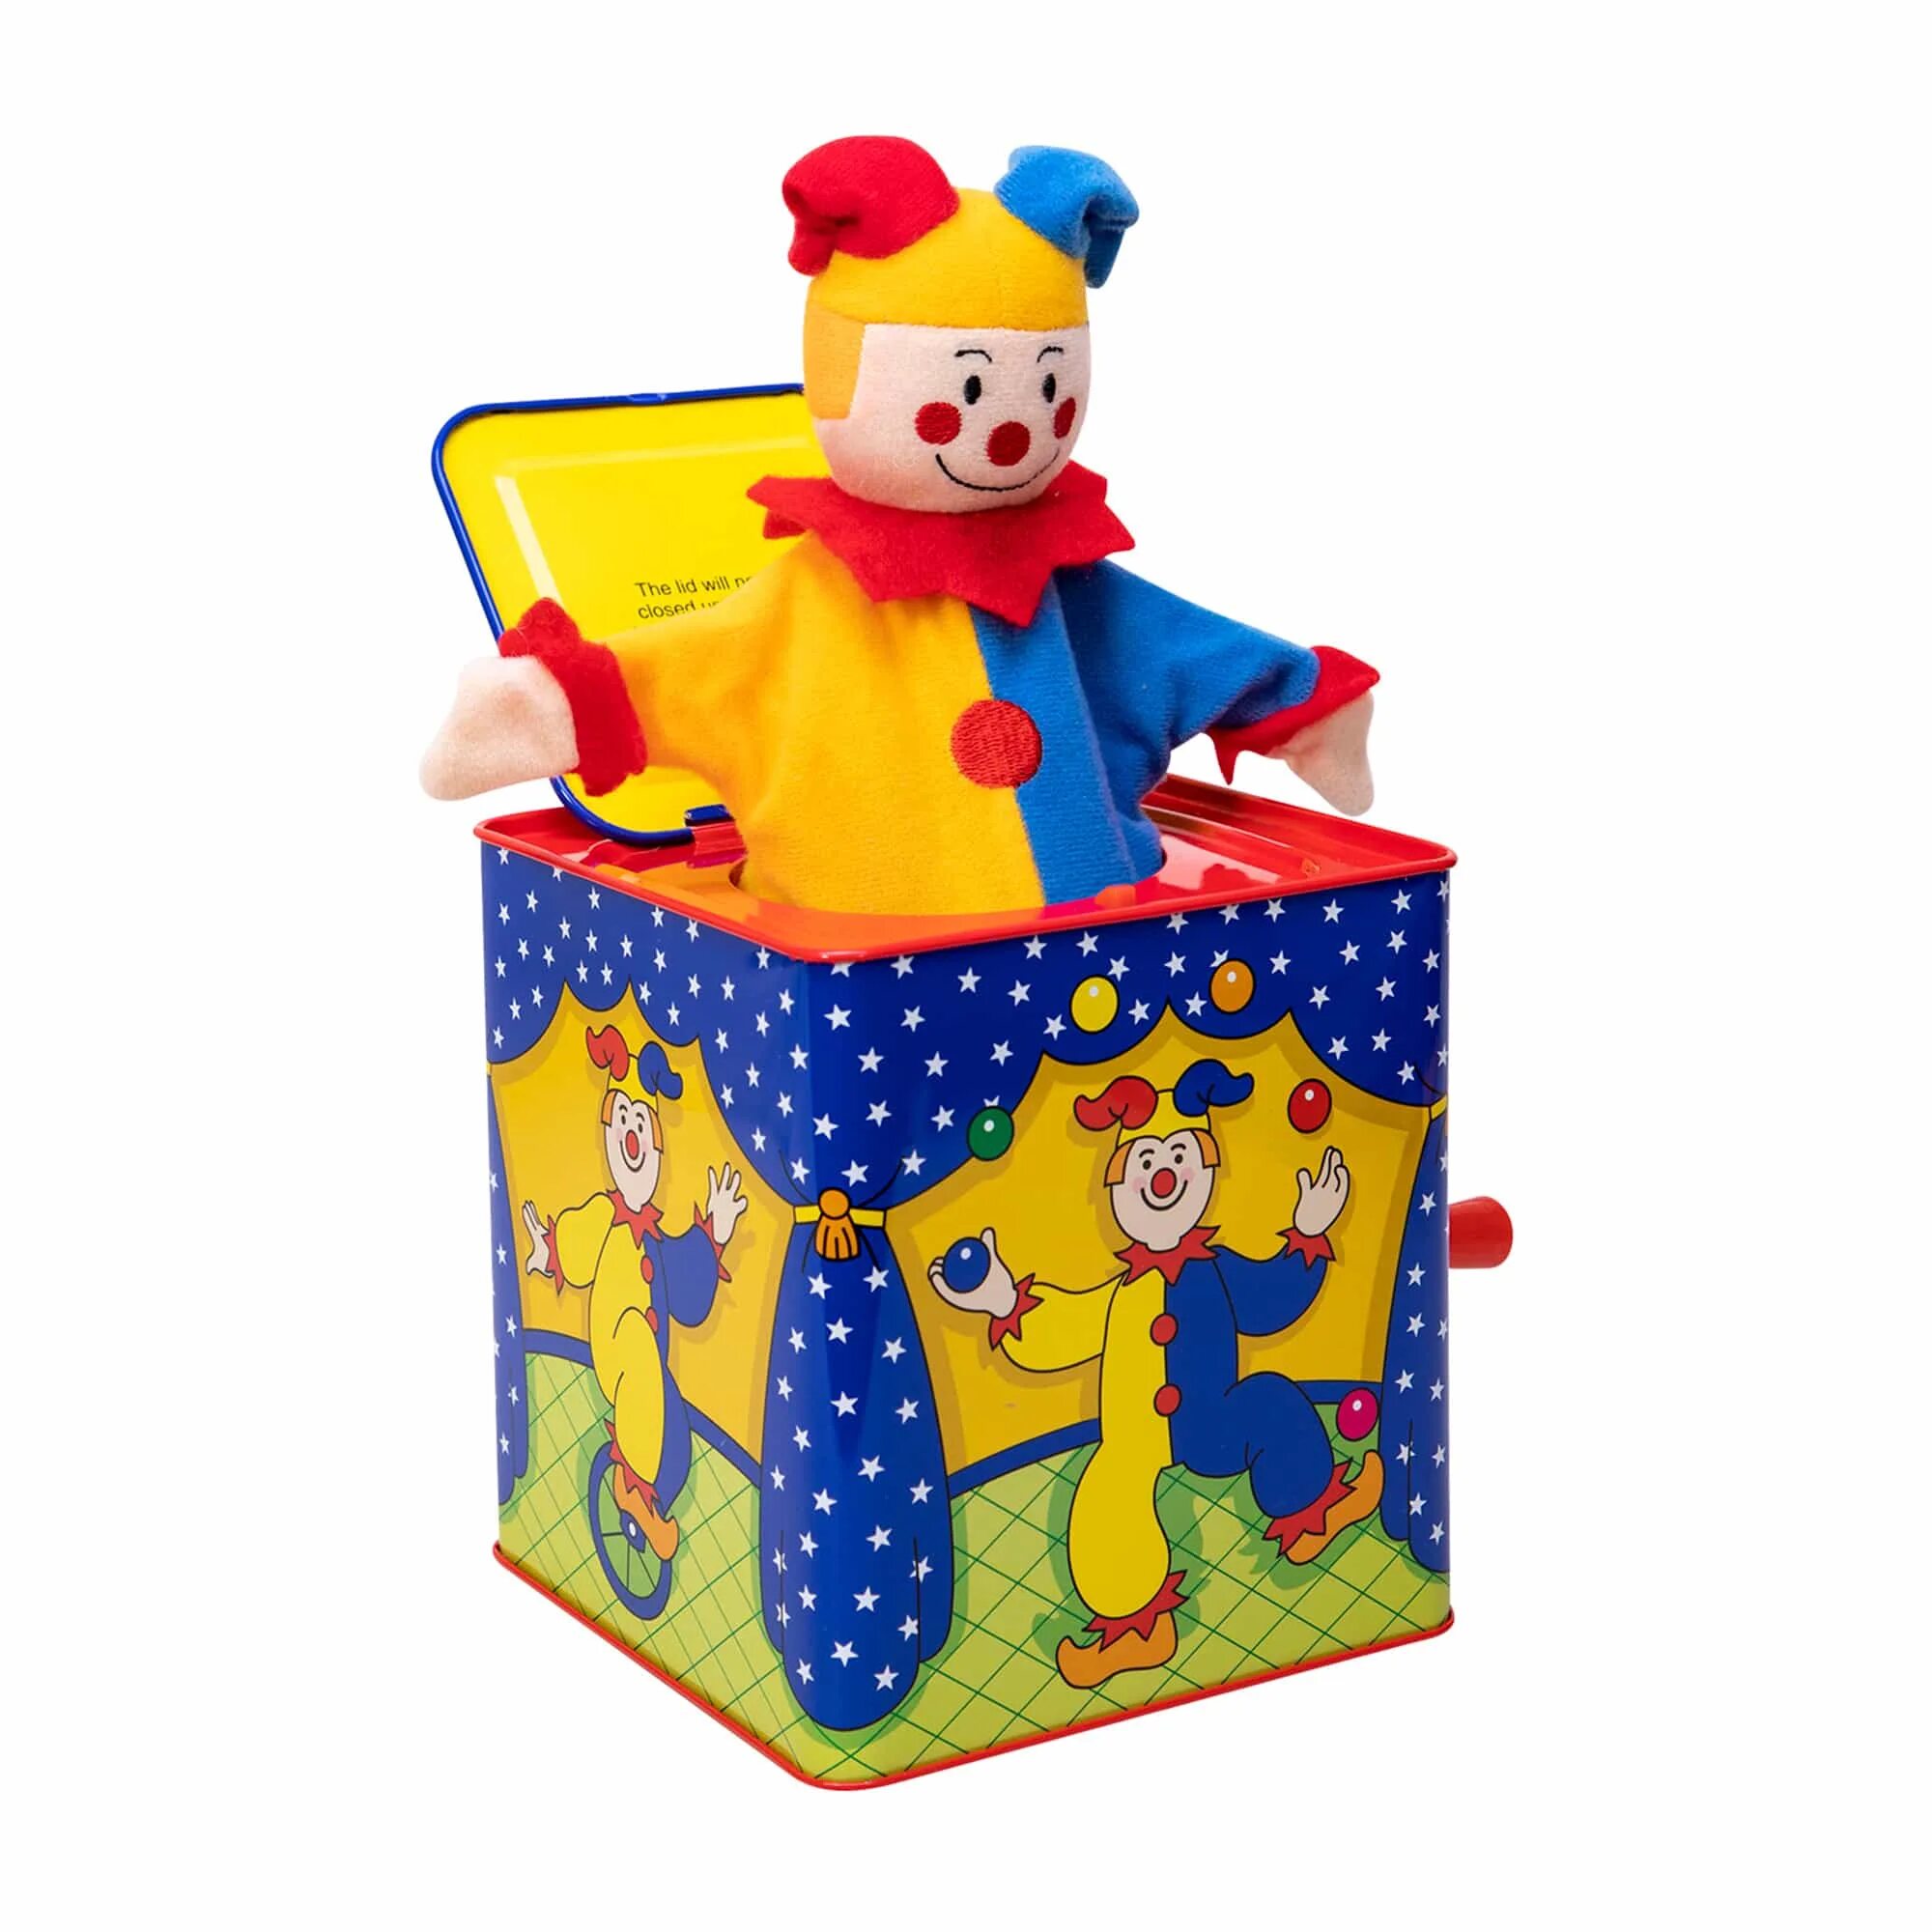 Fair hair puppet jack in the box. Jack in the Box шкатулка. Jack in the Box игрушка. Шкатулка с клоуном. Игрушка Джек в коробочке.